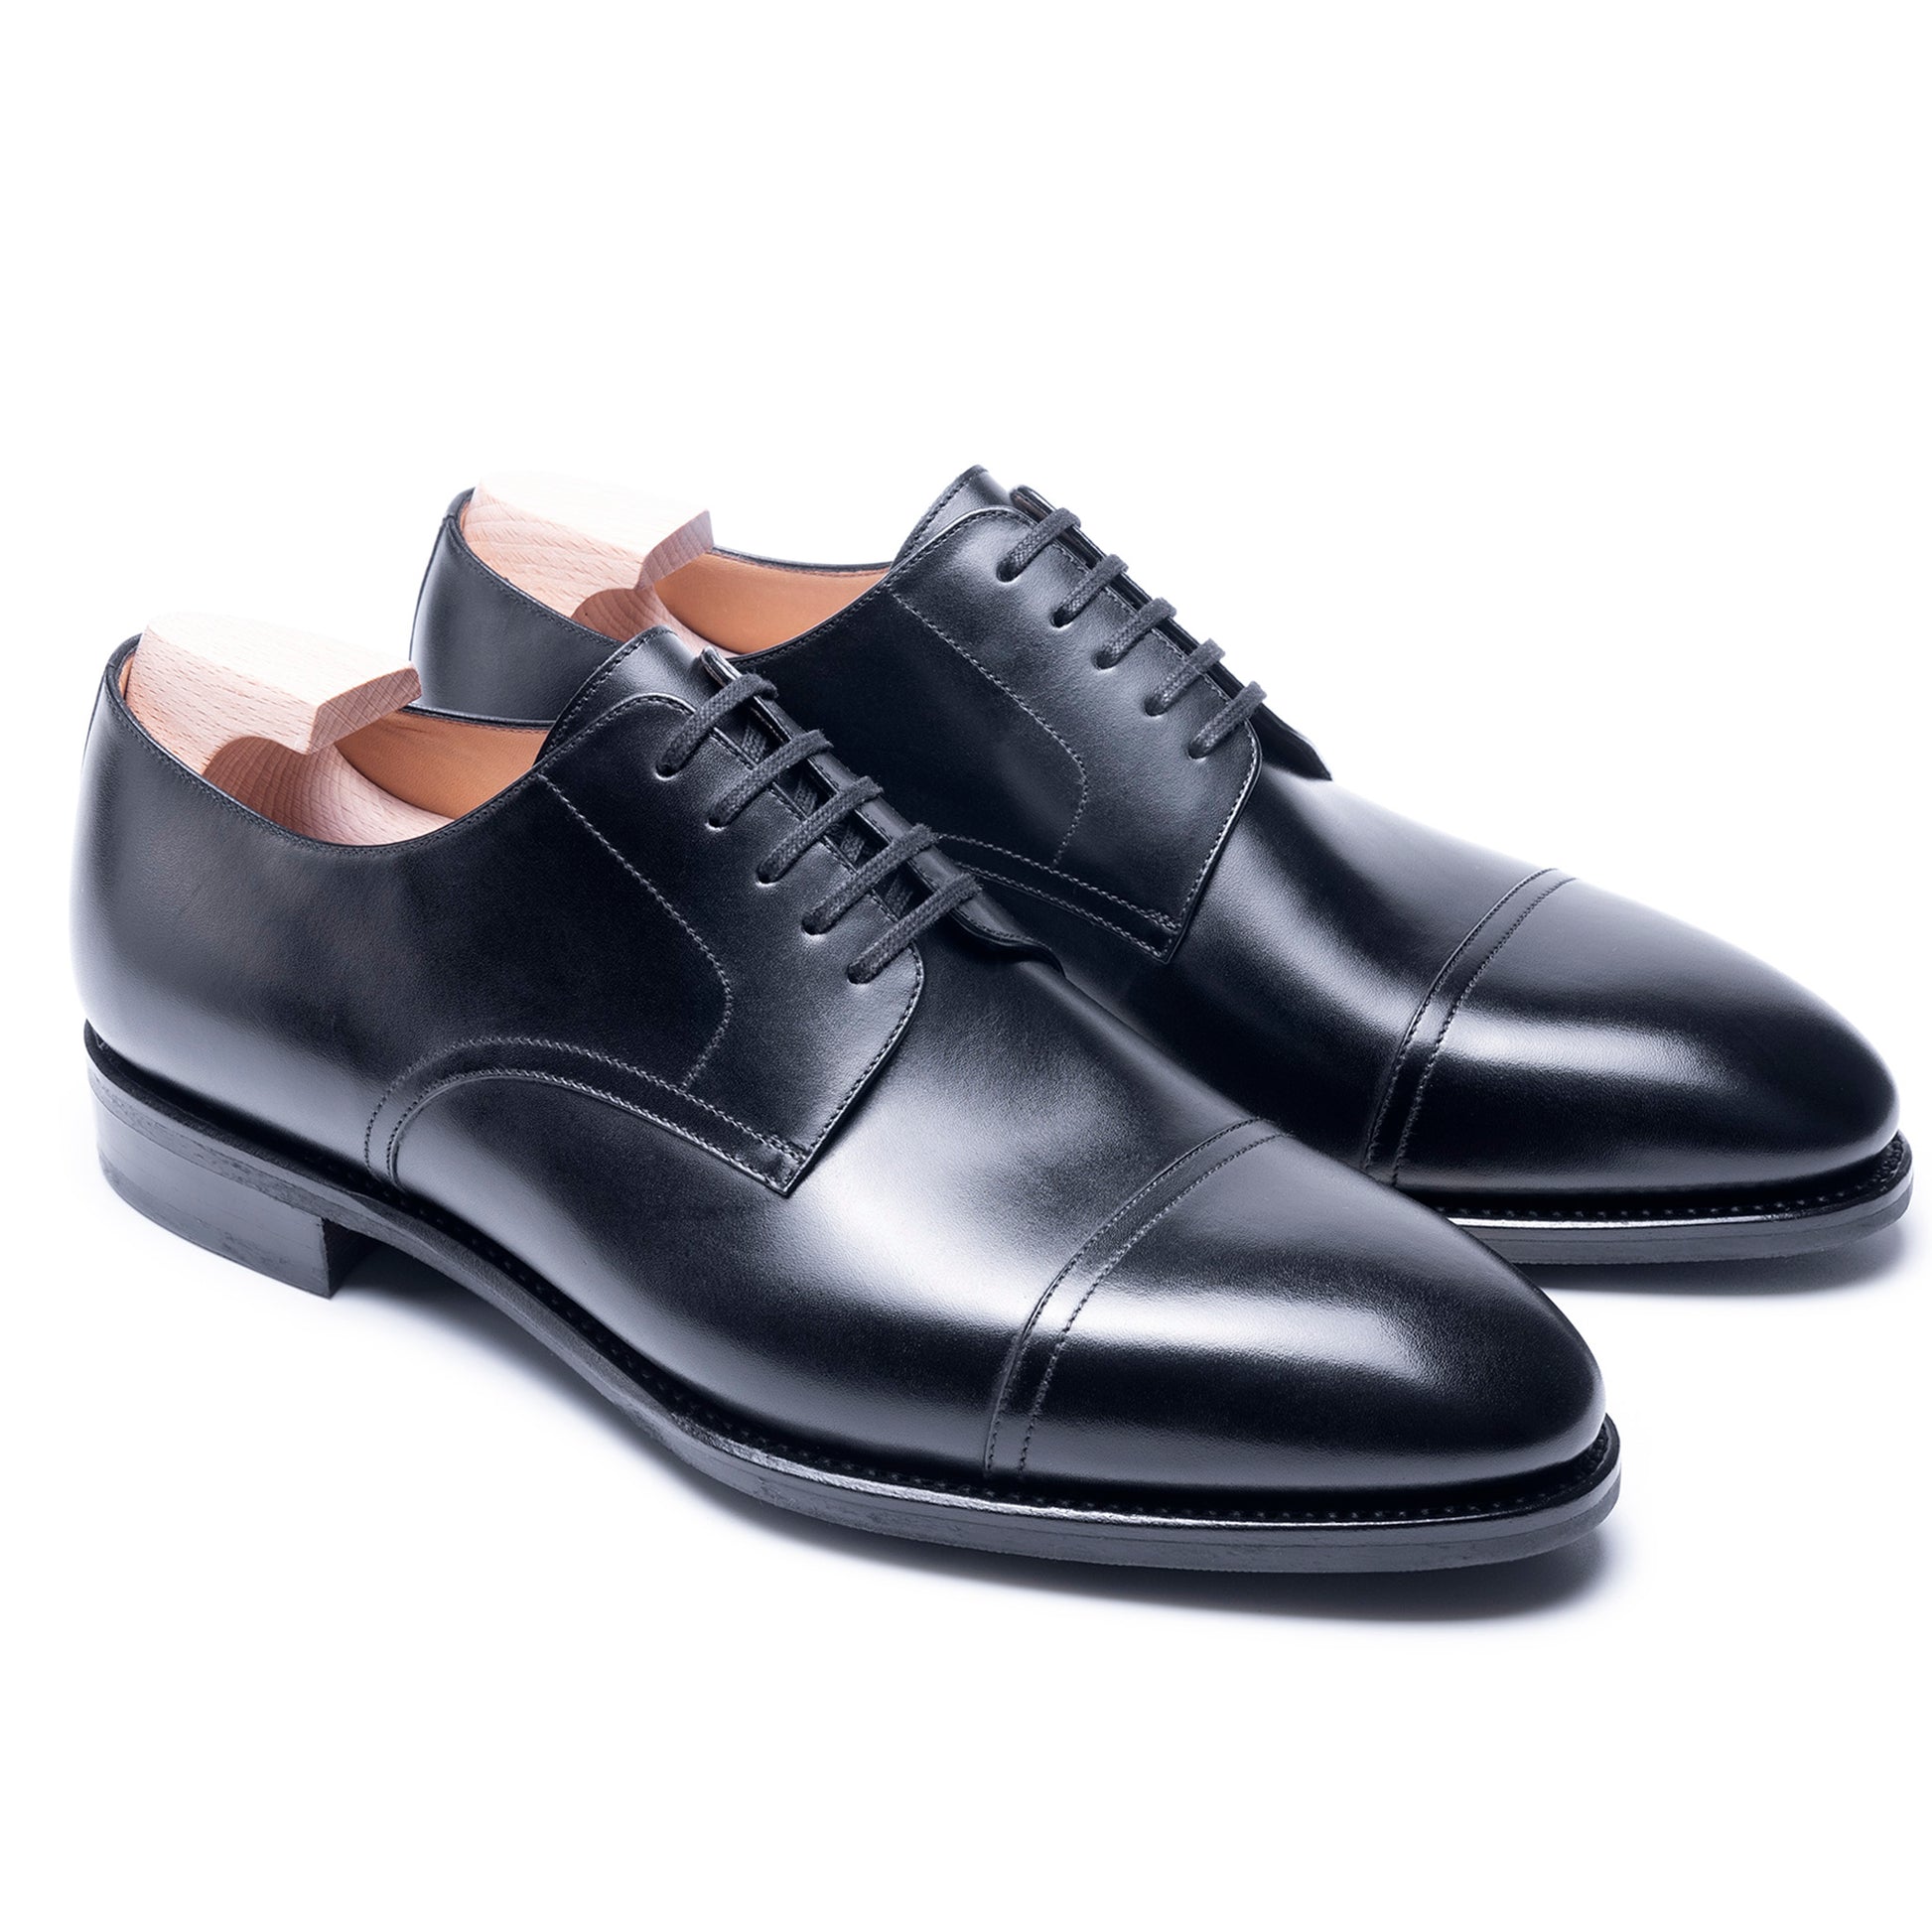 TLB Mallorca leather shoes 216 / GOYA / BOXCALF BLACK